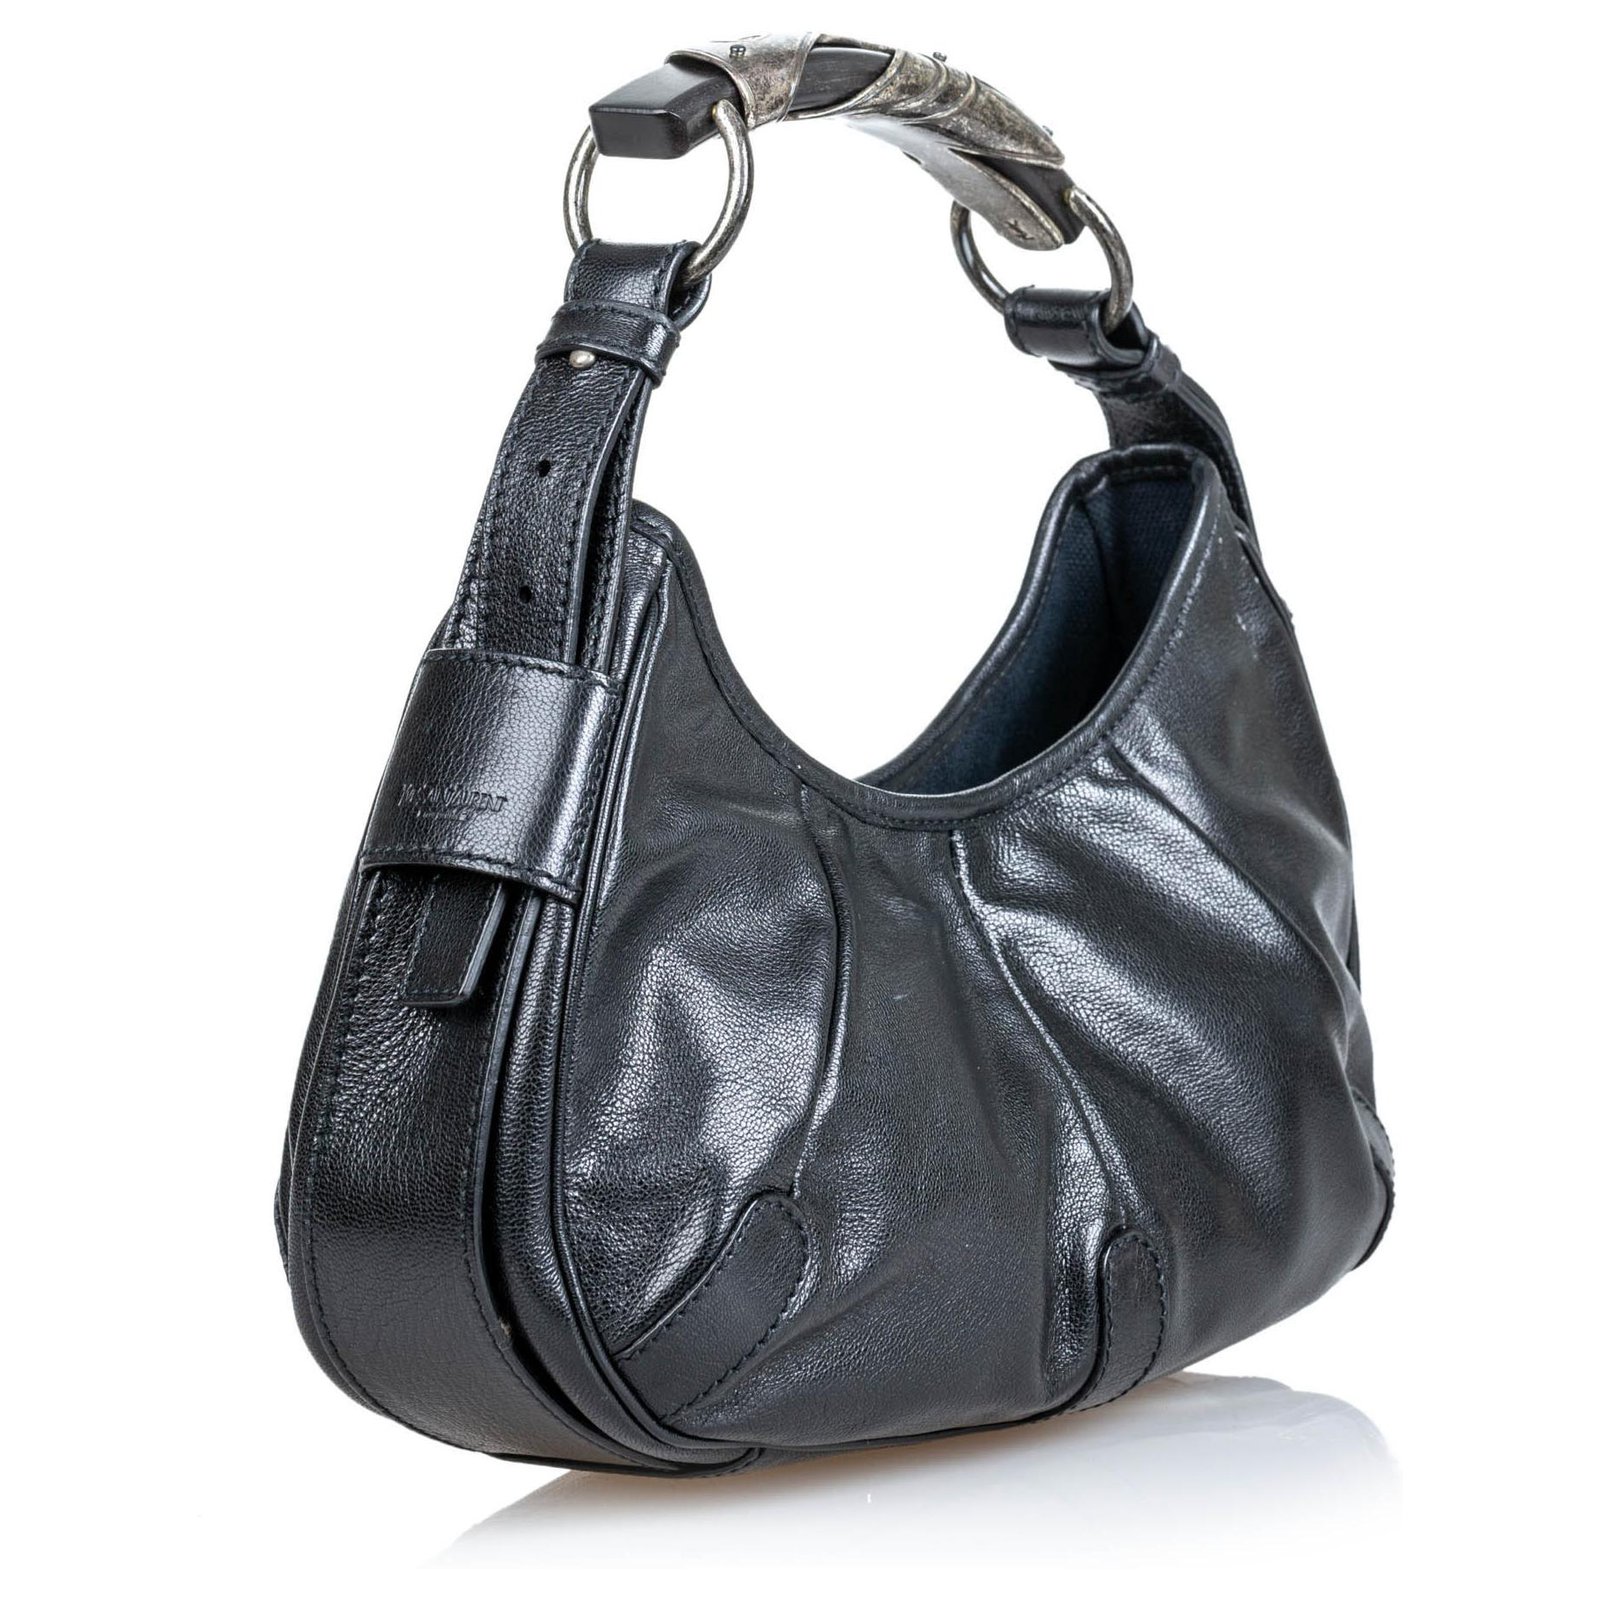 Mombasa leather handbag Yves Saint Laurent Black in Leather - 37054522